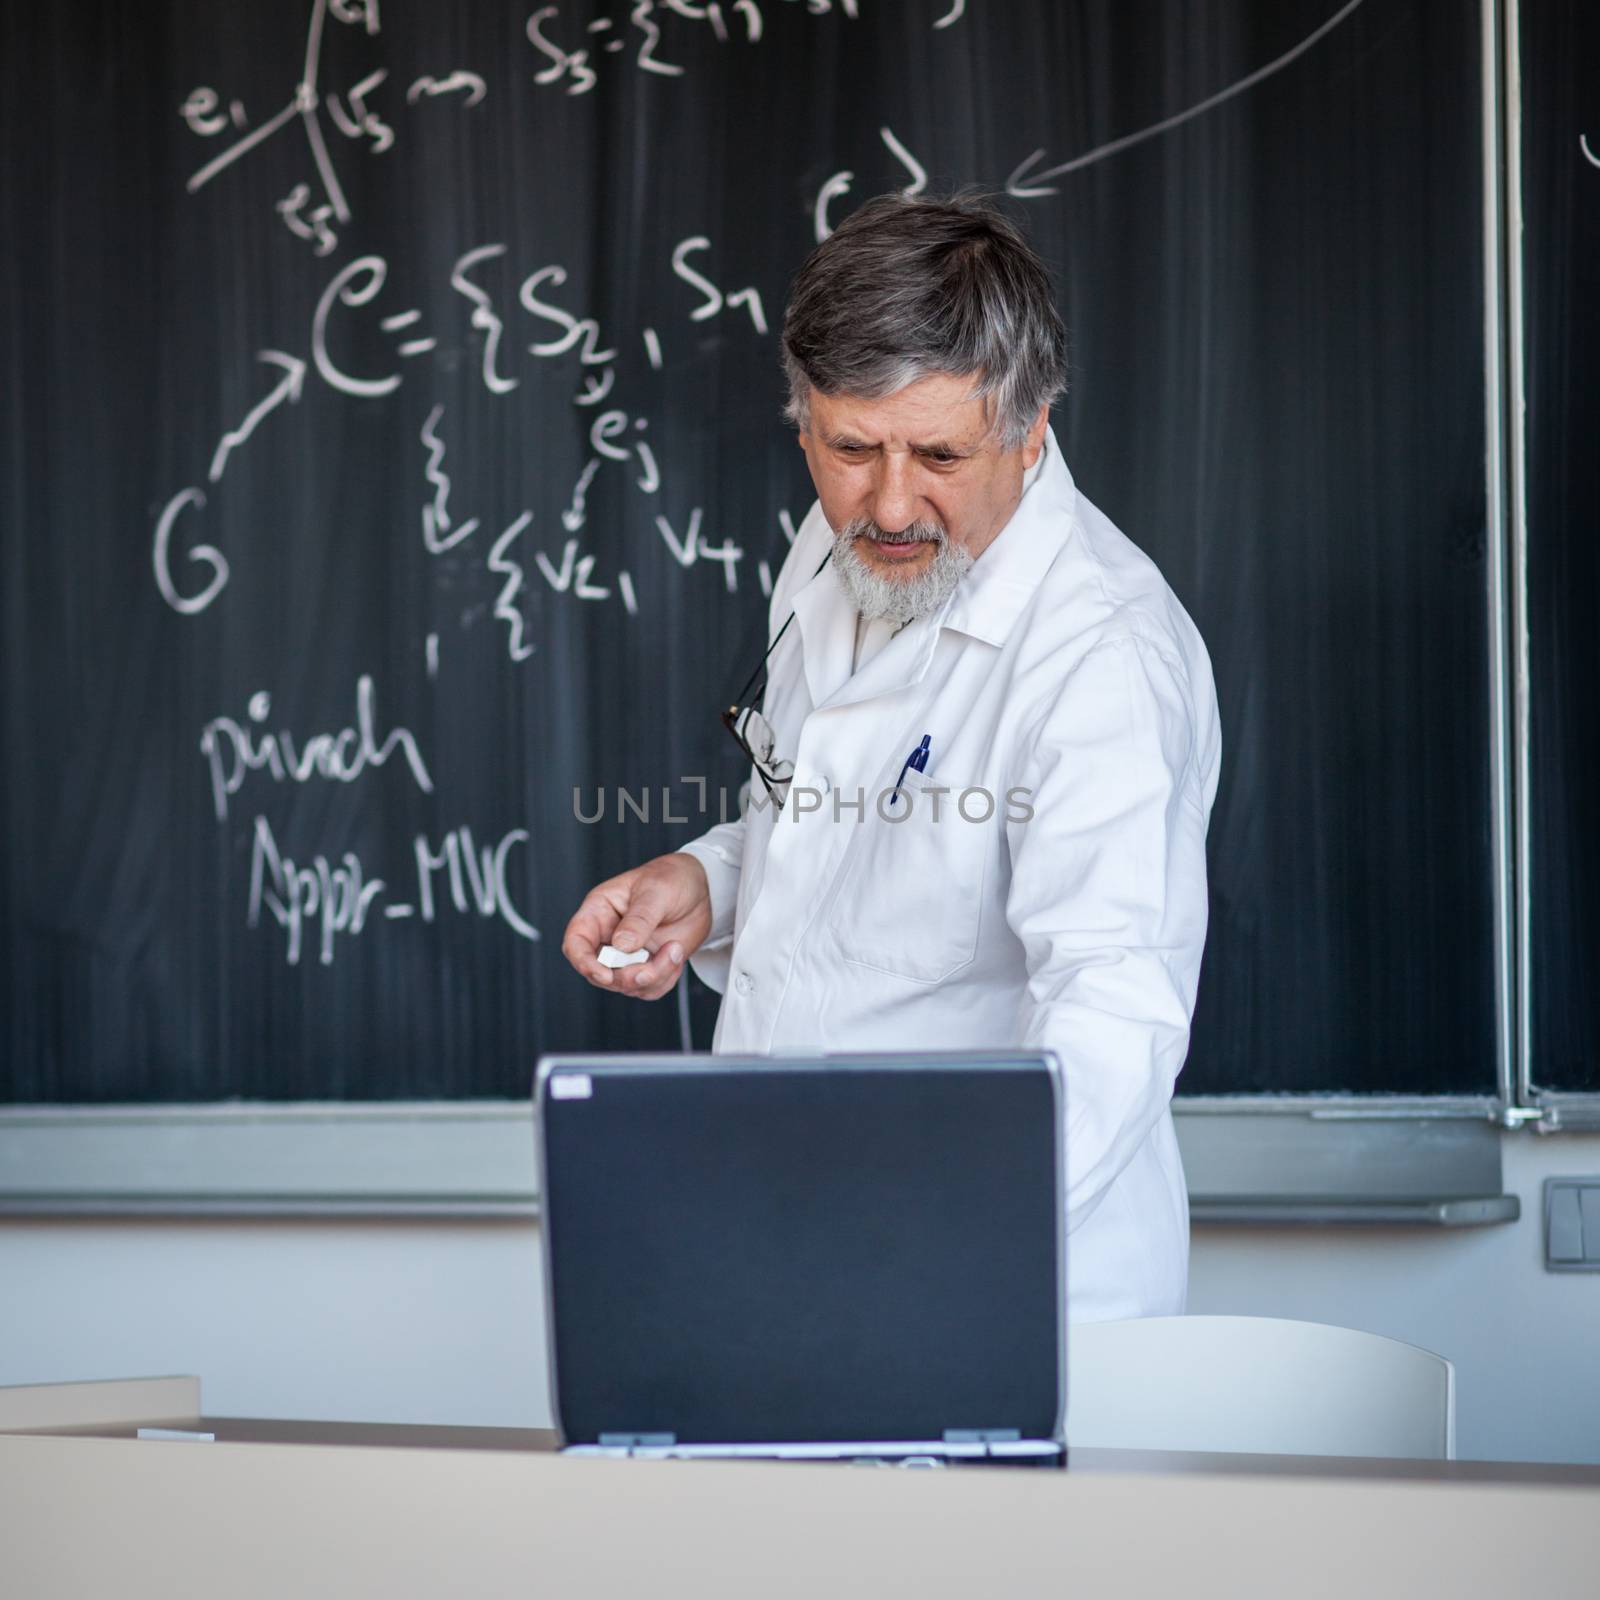 Senior chemistry professor writing on the board by viktor_cap